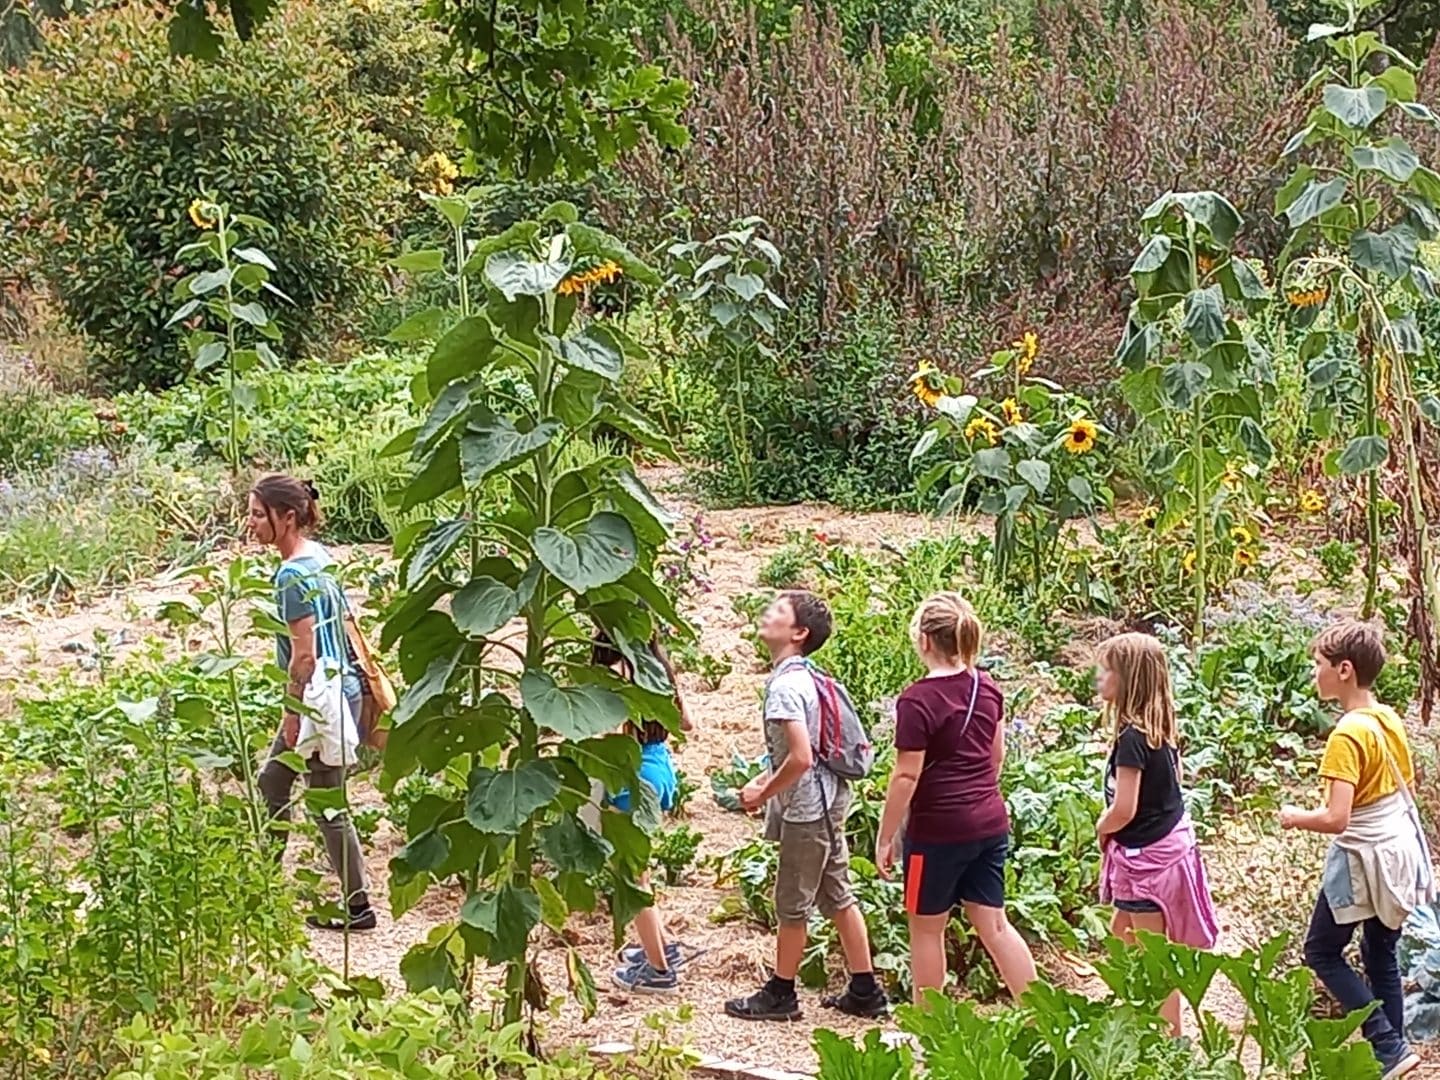 Visiter un jardin en permaculture